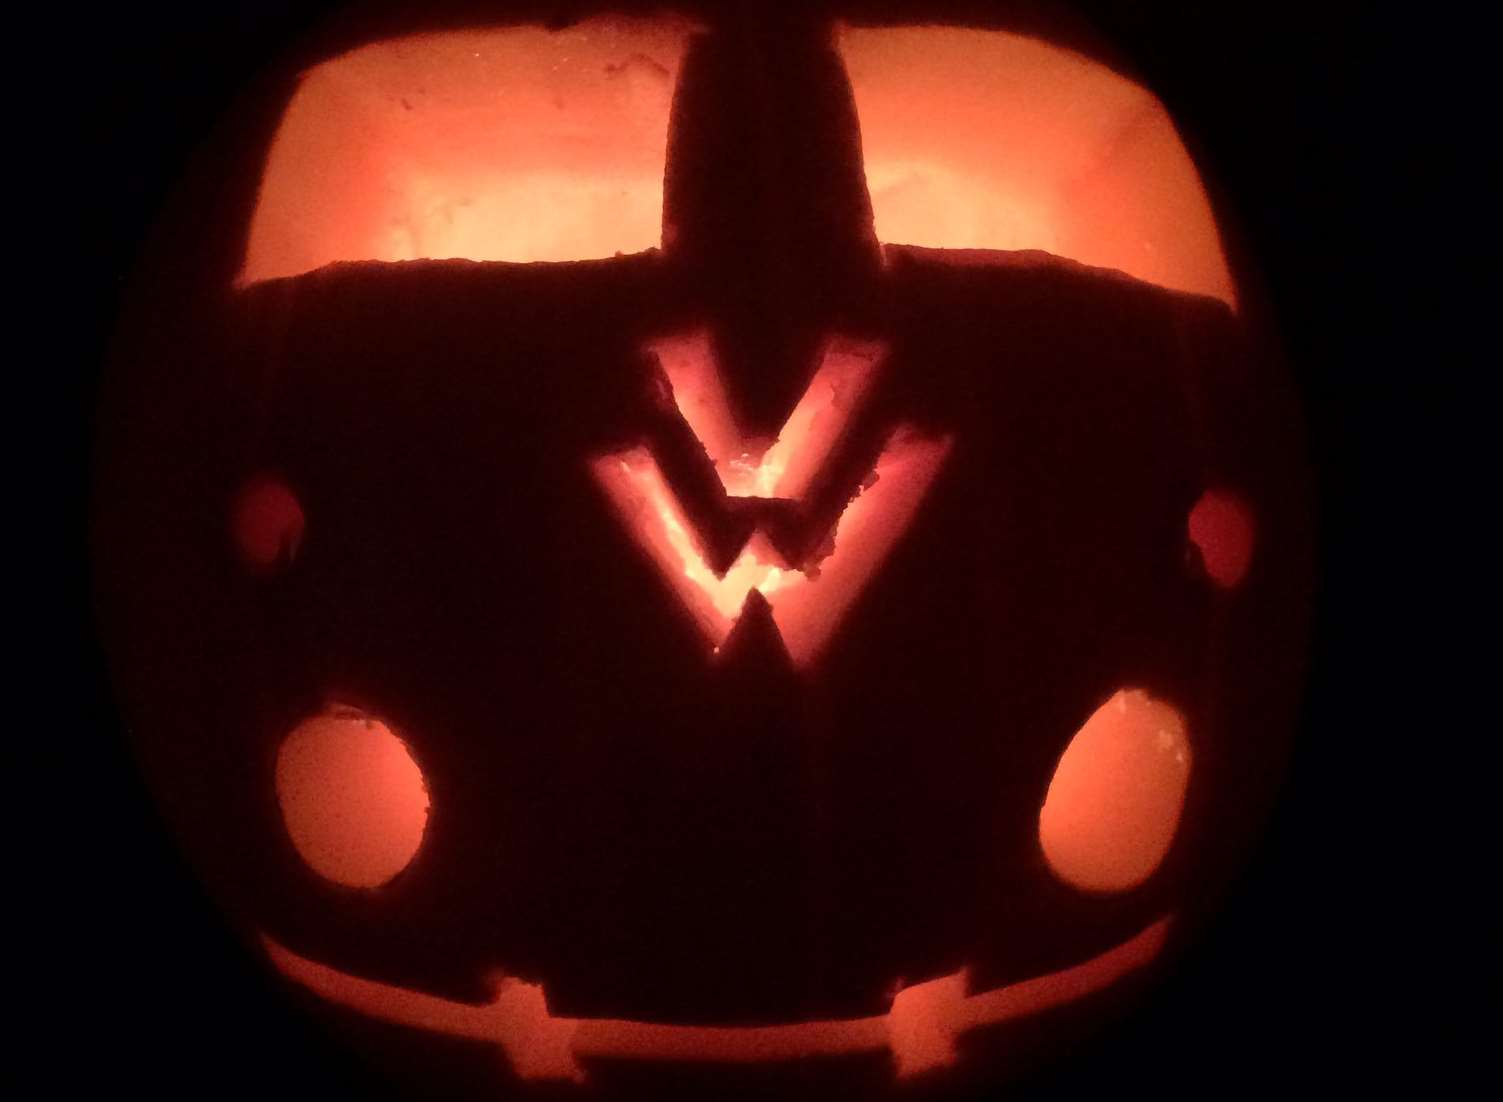 GK Ceramics carved this VW pumpkin